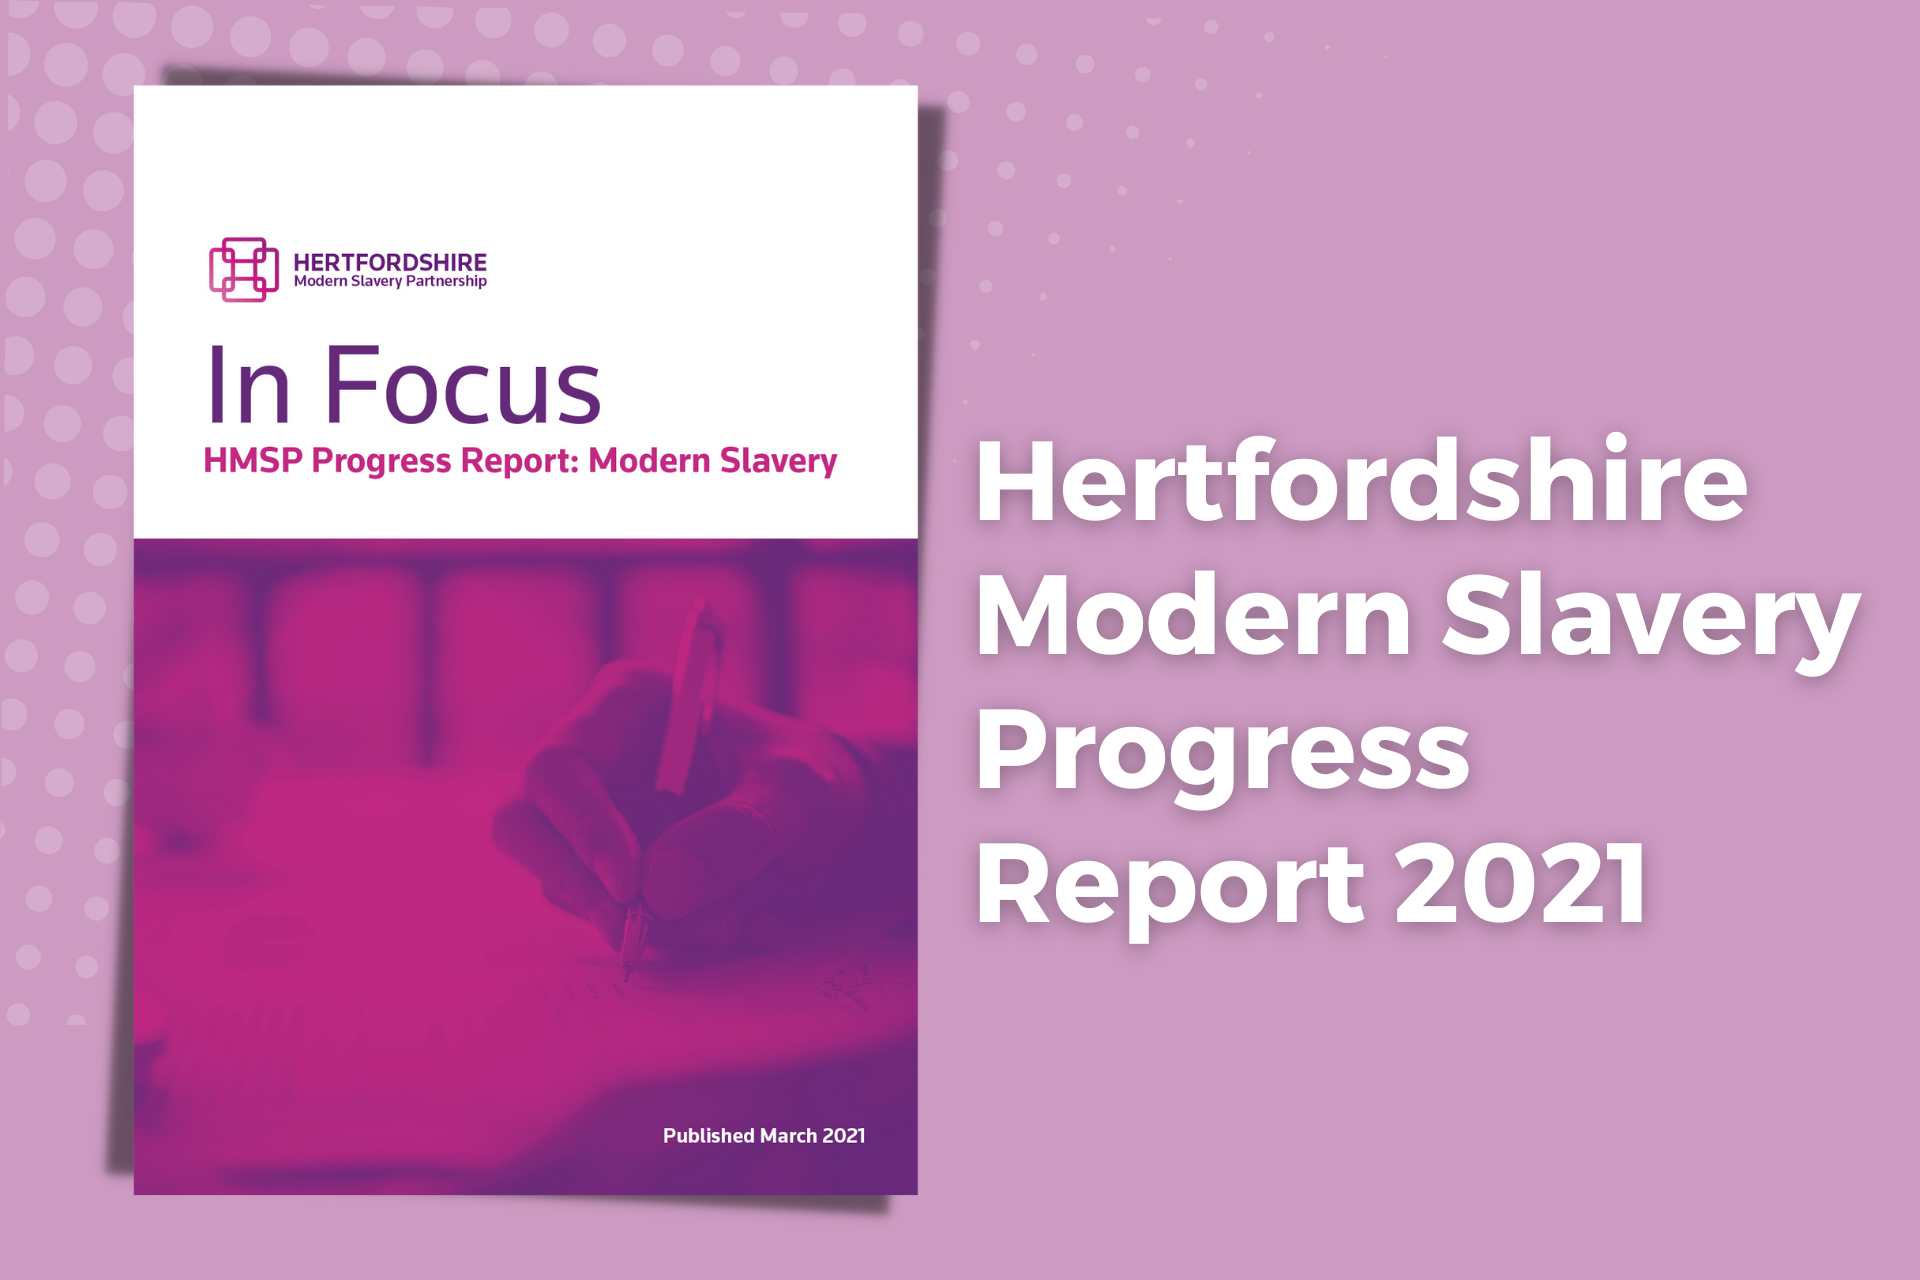 Hertfordshire Modern Slavery Progress Report 2021